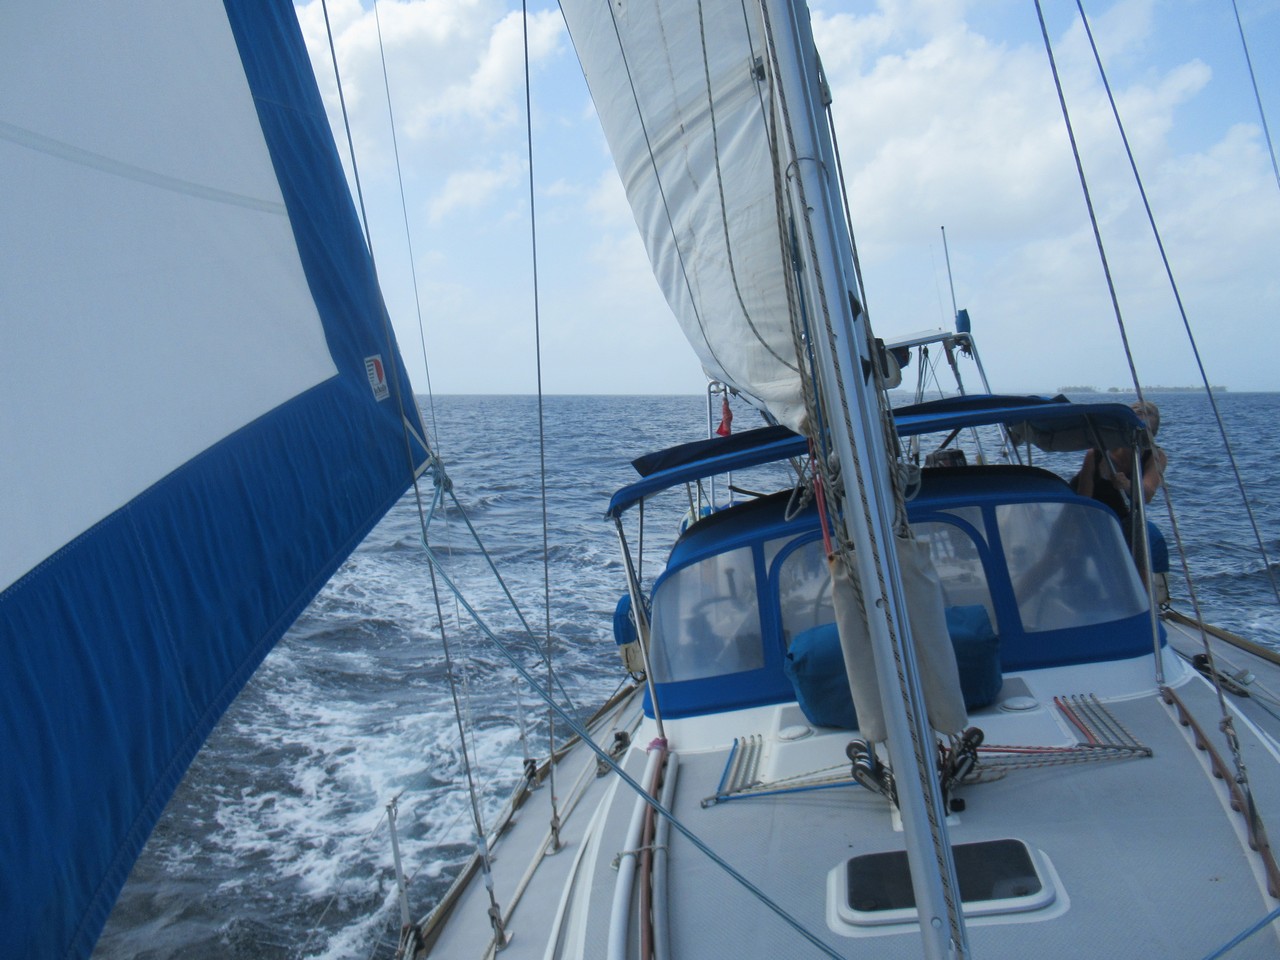 More upwind sailing.